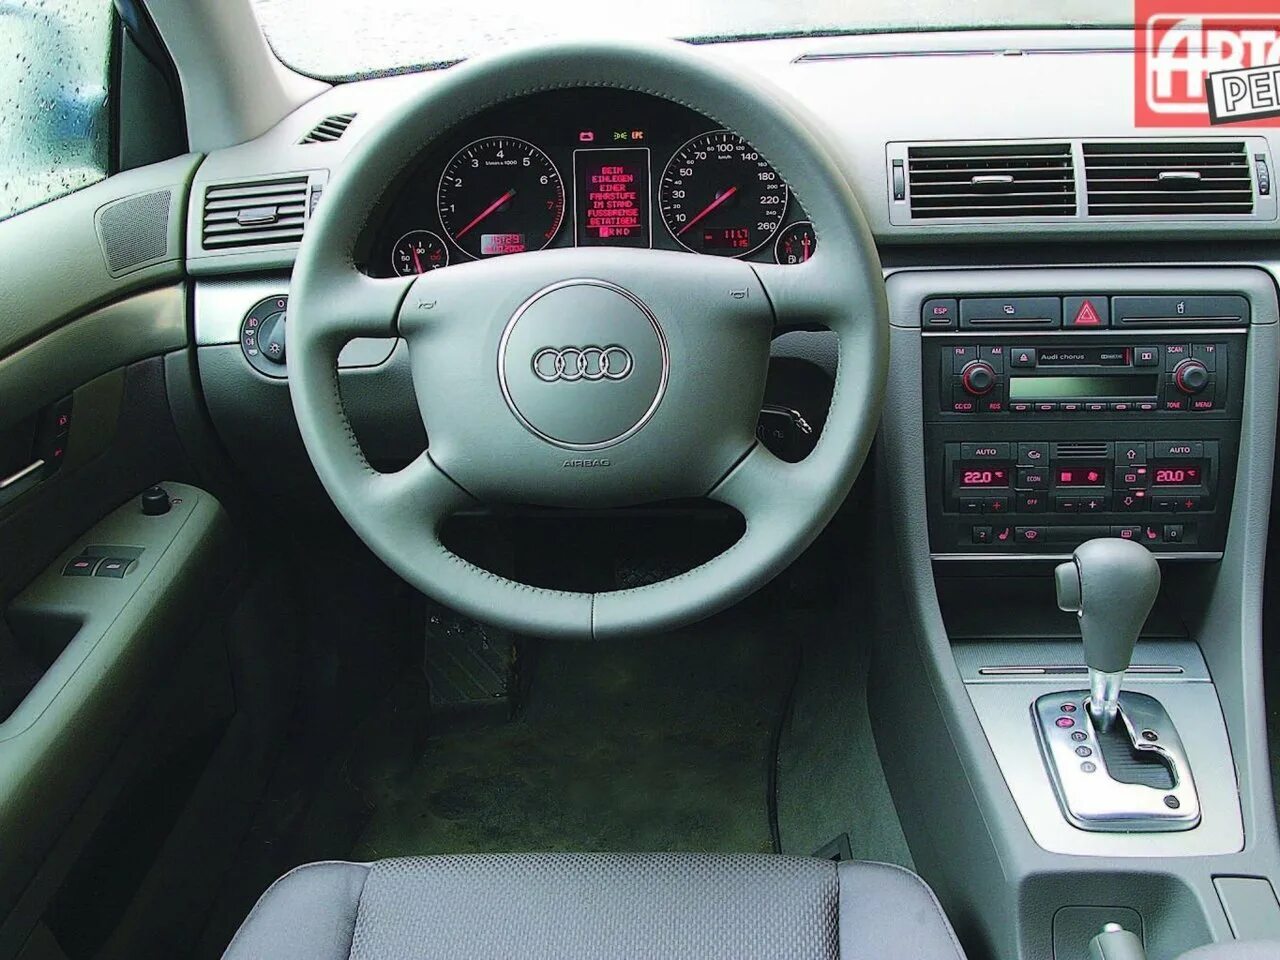 B4 2 b6 200. Audi a4 2001 универсал. Ауди а4 2001 года салон. Audi a4 b6 2001-2005. Audi a6 c5 1.8 Turbo 2001 Salon.